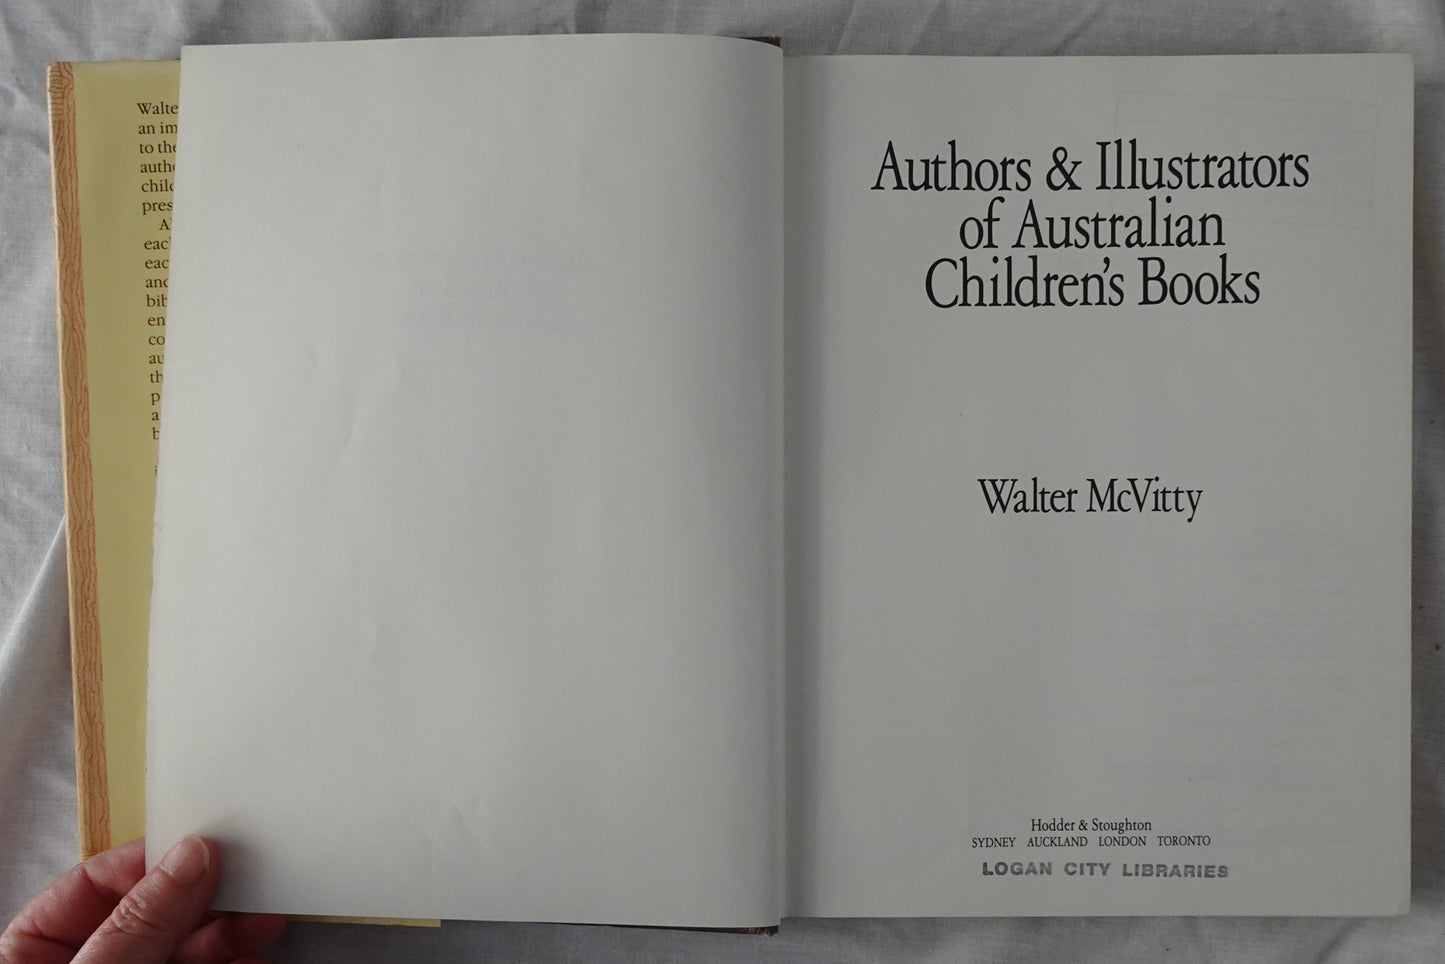 Authors & Illustrators of Australian Children’s Books by Walter McVitty